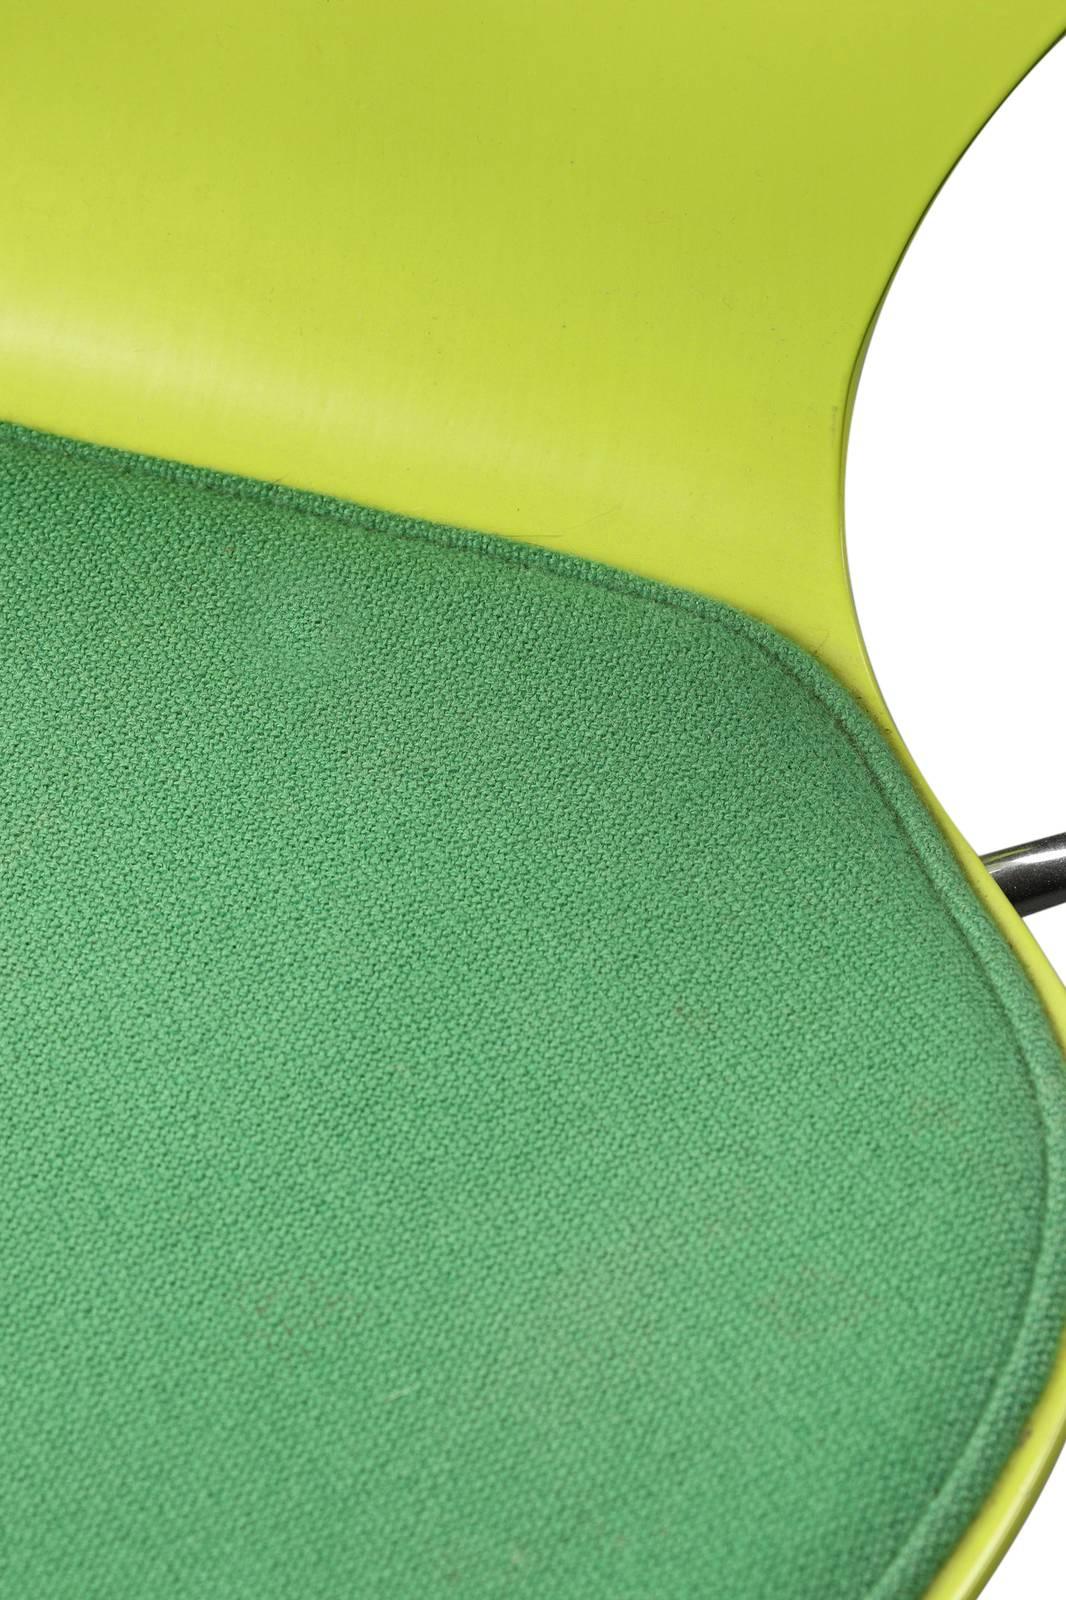 Mid-20th Century Arne Jacobsen - Green Chairs - Fritz Hansen - 1950s For Sale